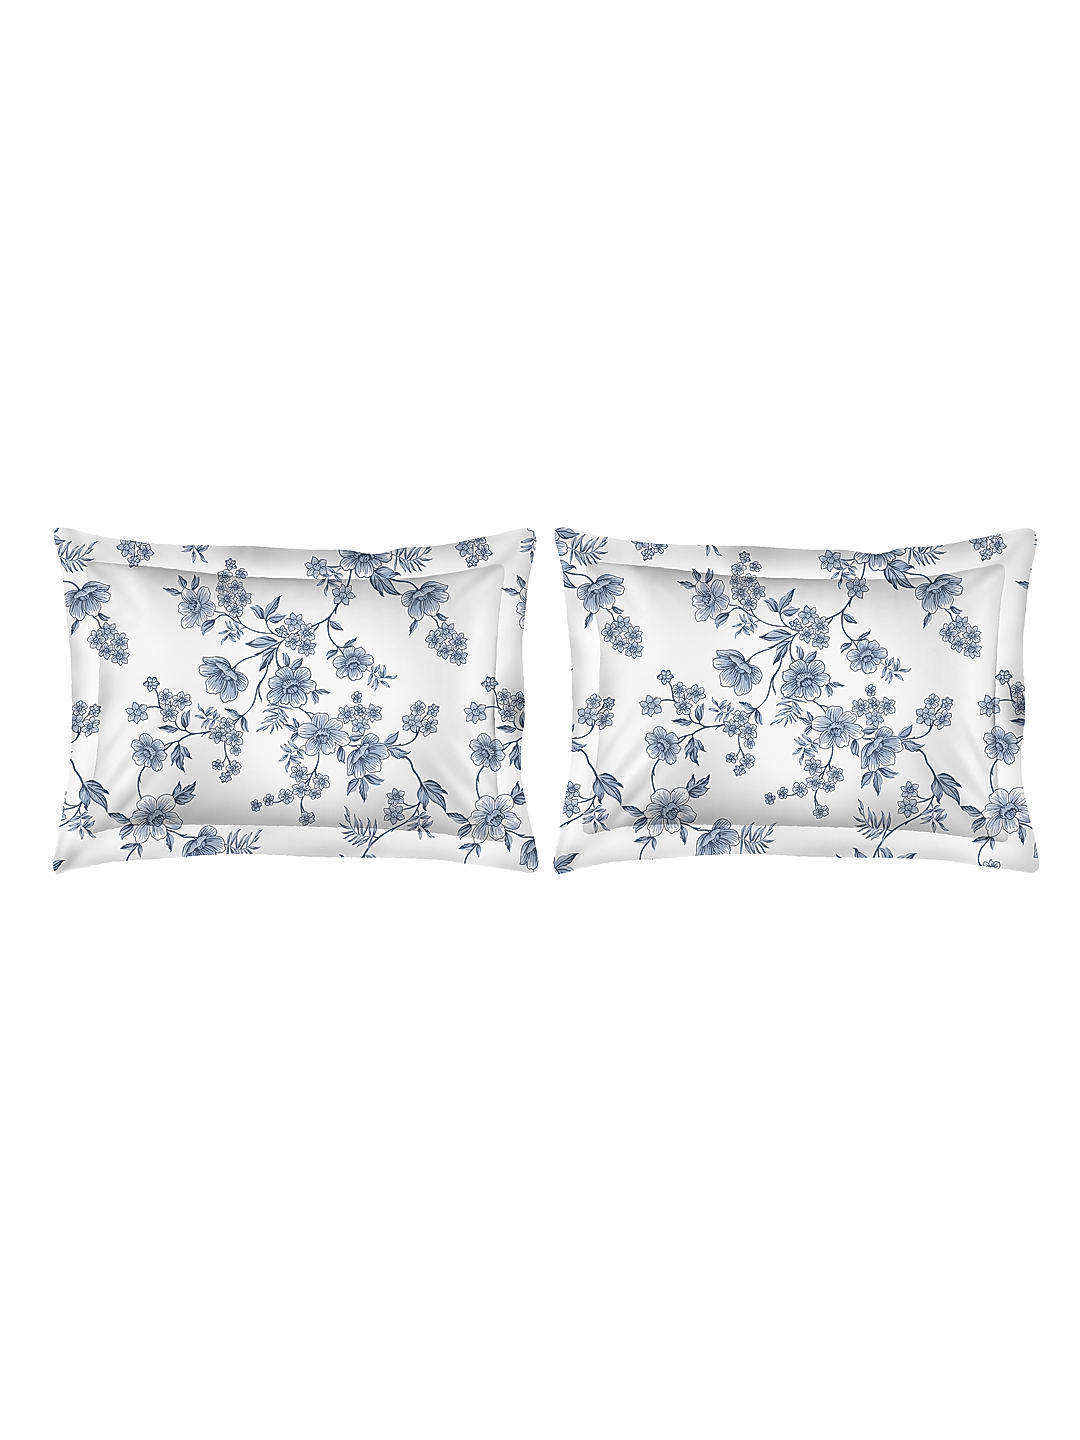 Cottage Garden-2 300 TC 100% cotton Ultra Fine White/Blue Colored Floral Print King Bed Sheet Set